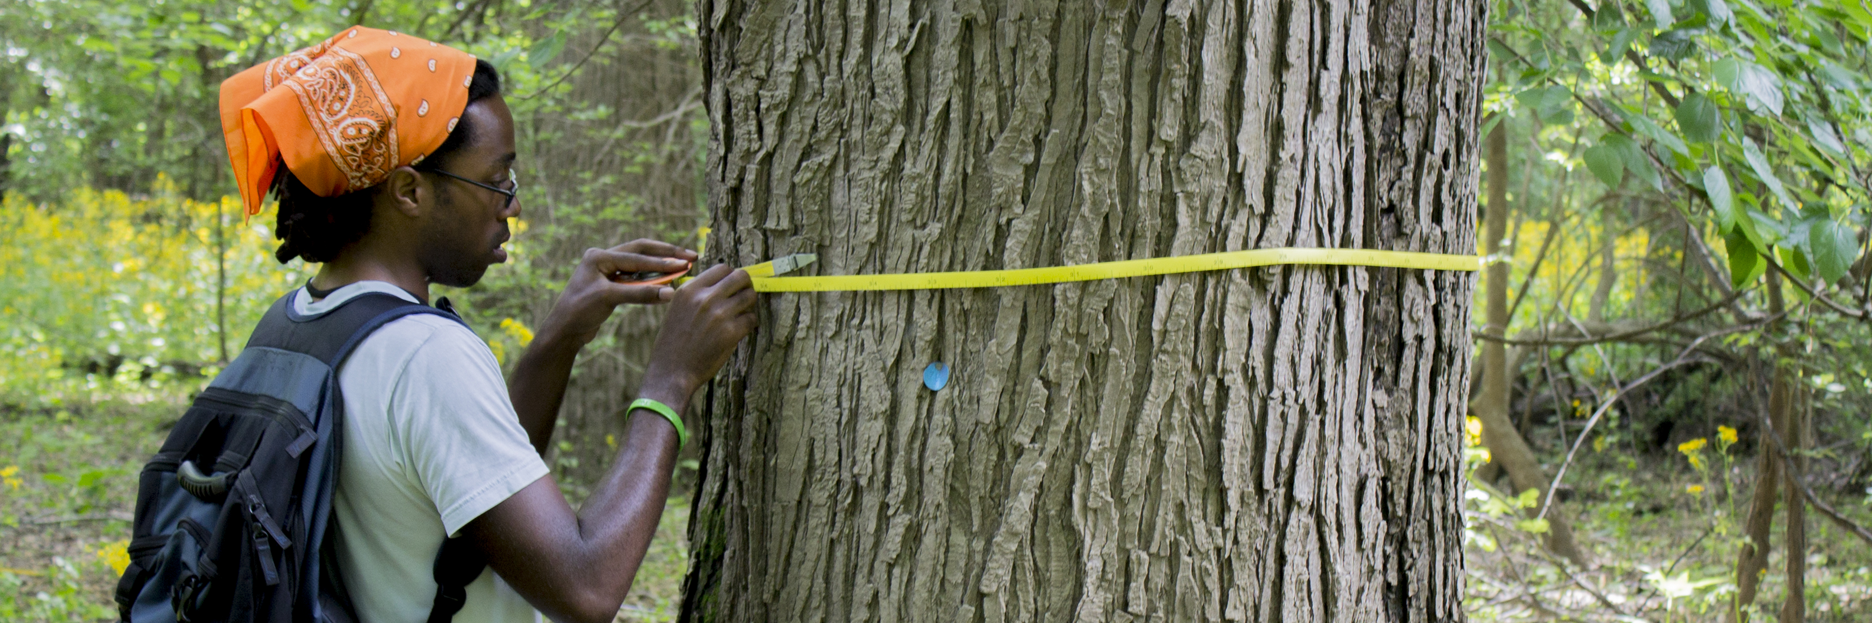 person measuring a tree